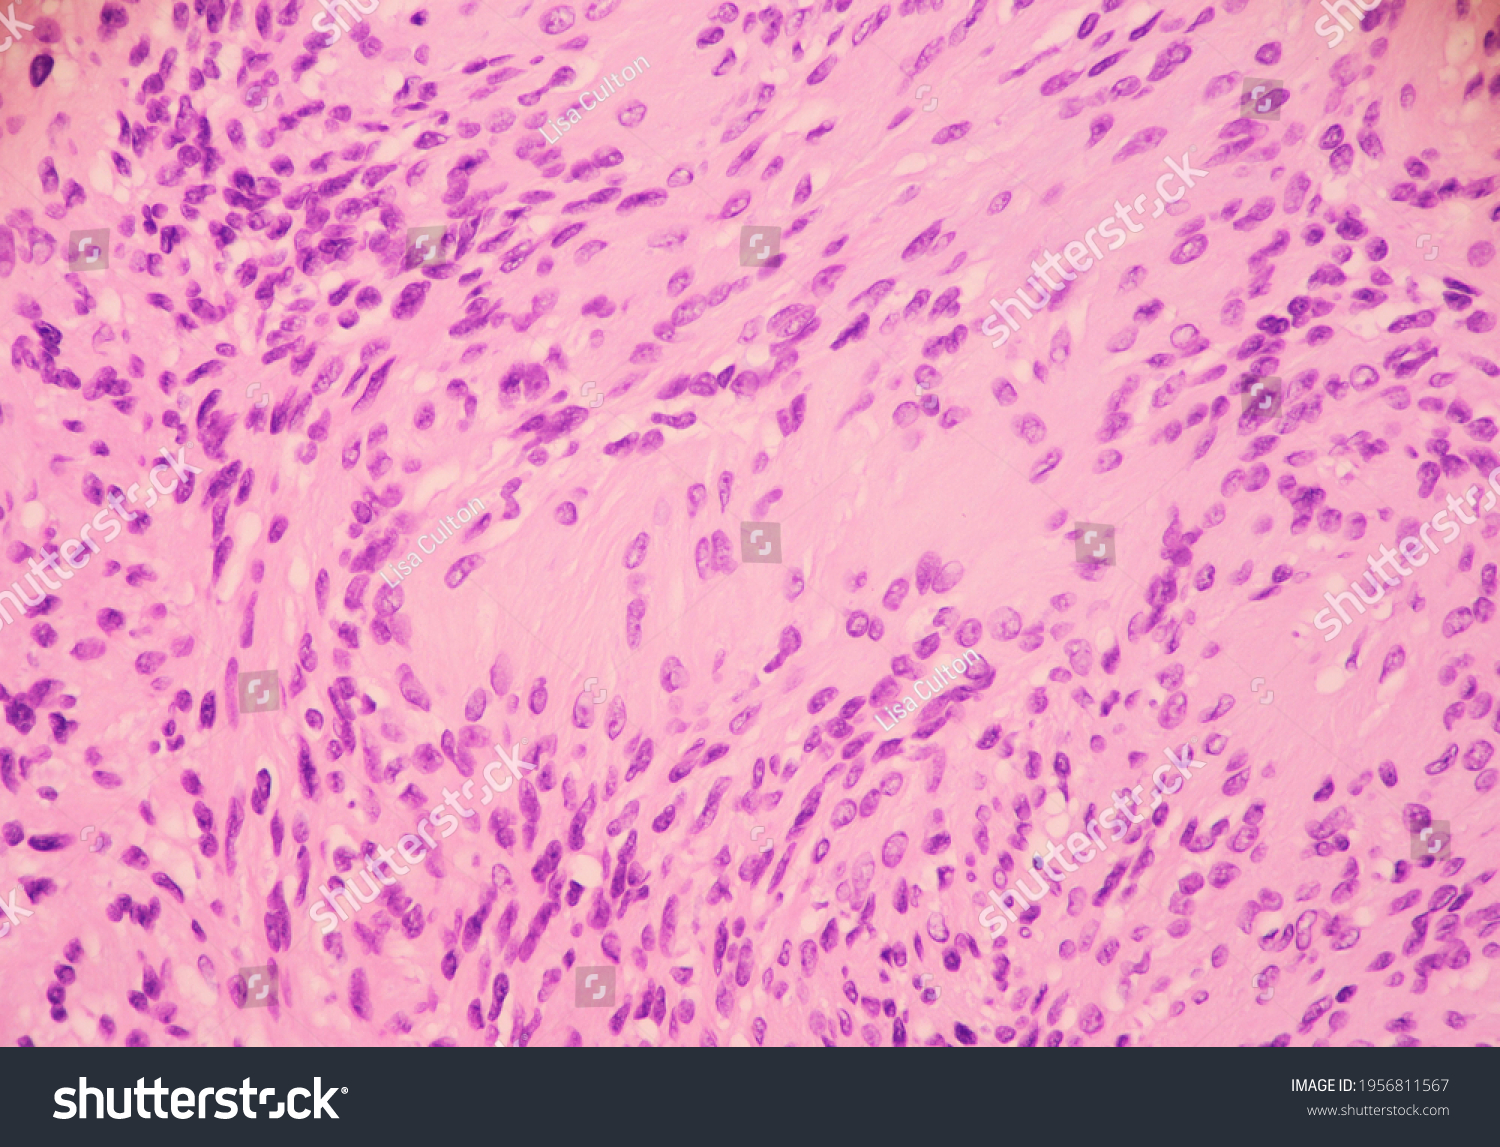 Benign nerve sheath tumor called a Schwannoma. Microscopic view. #1956811567